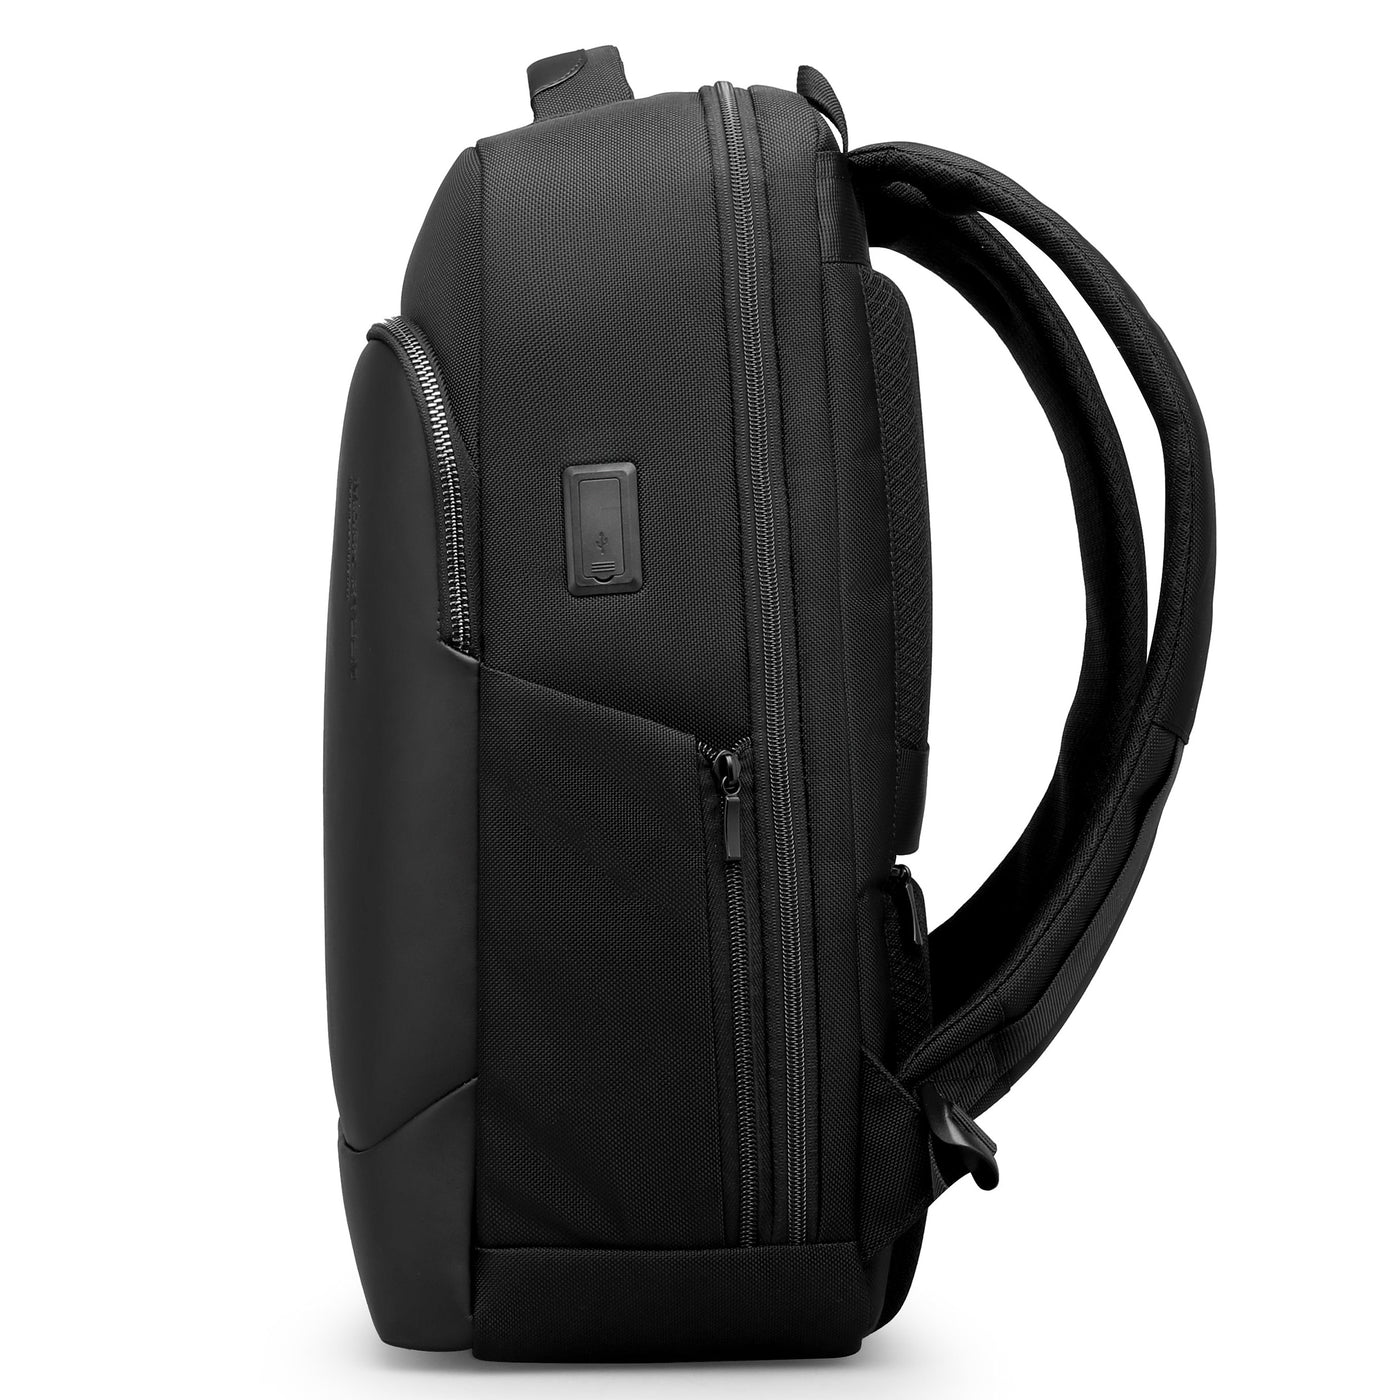 Mark Ryden Exile business and travel laptop backpack